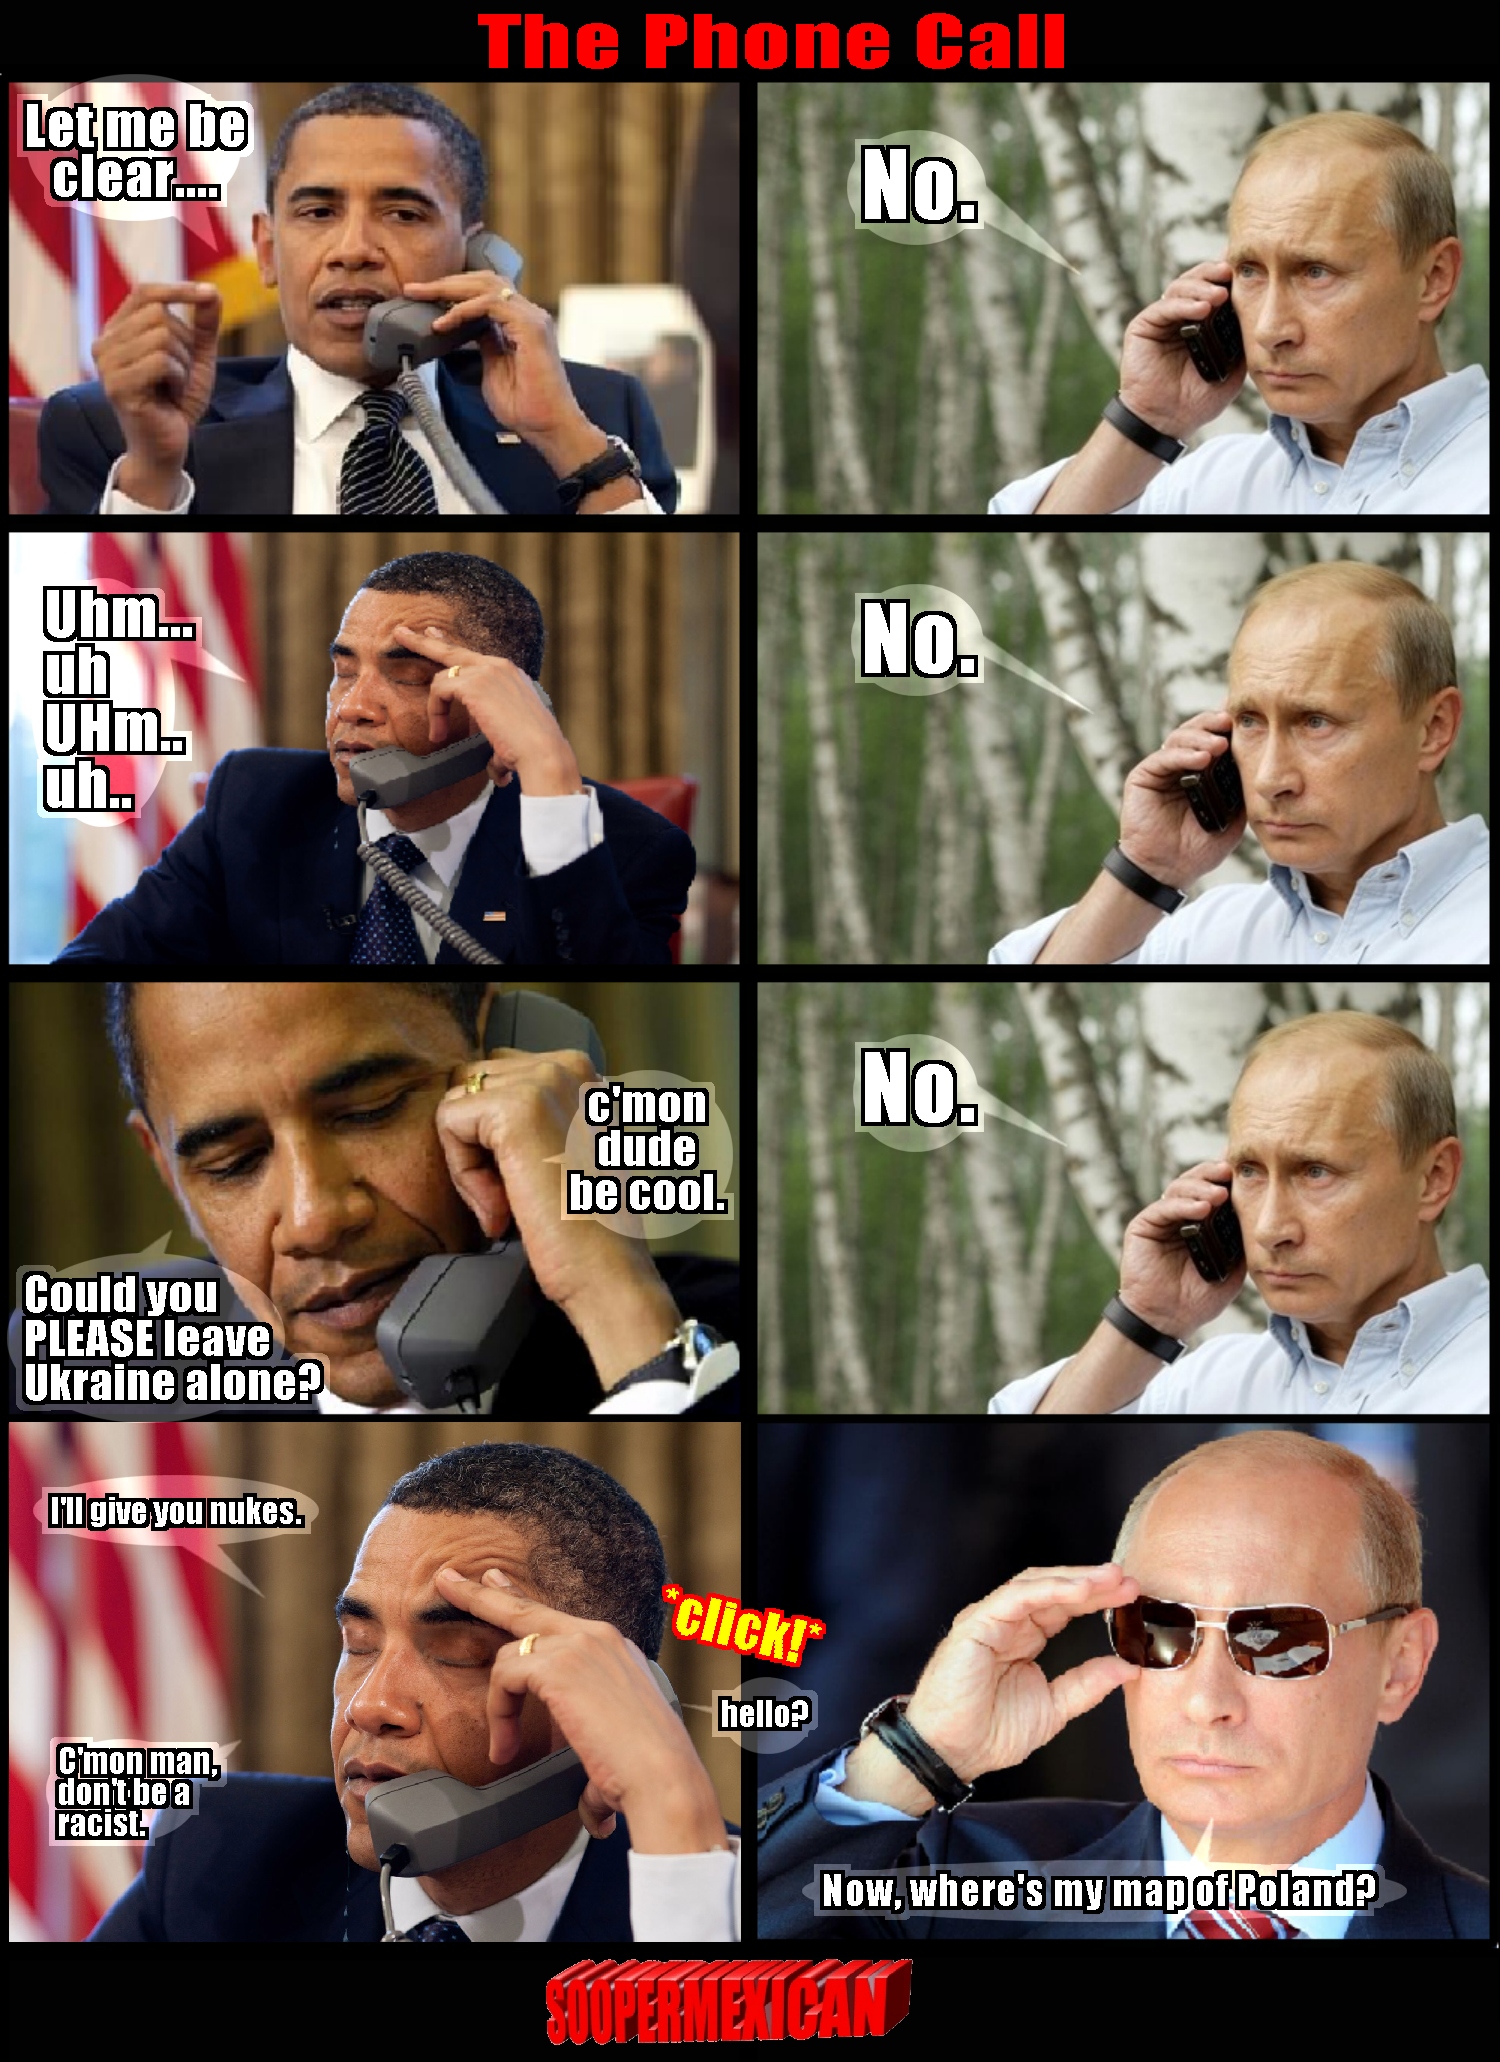 putin-obama-phone-call-2.jpg